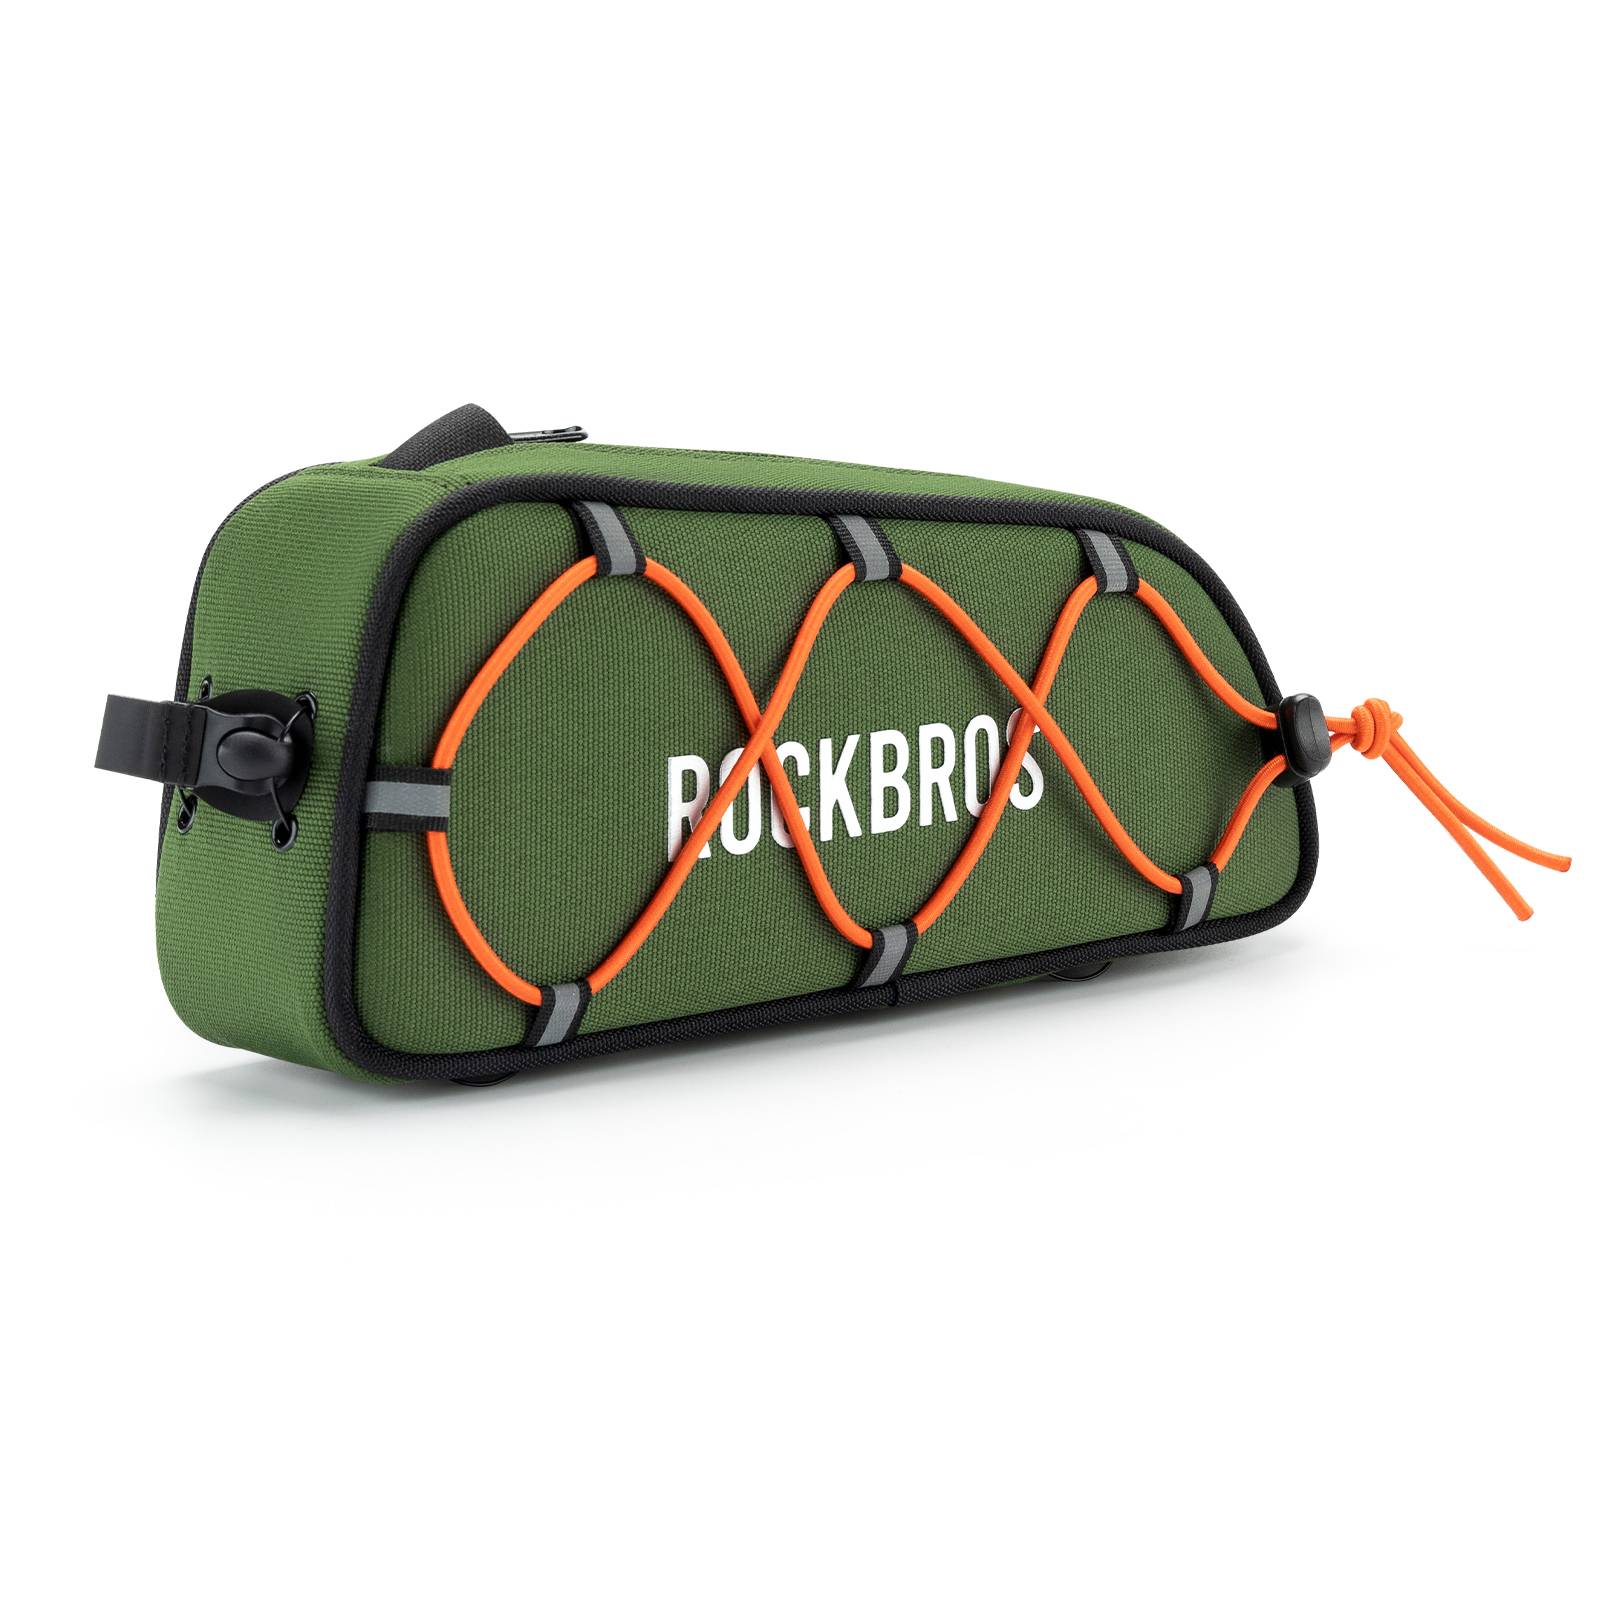 ROCKBROS Bicycle Top Tube Bag Frame Bag 0.7L Reflective Bicycle Bag #Color_Army Green